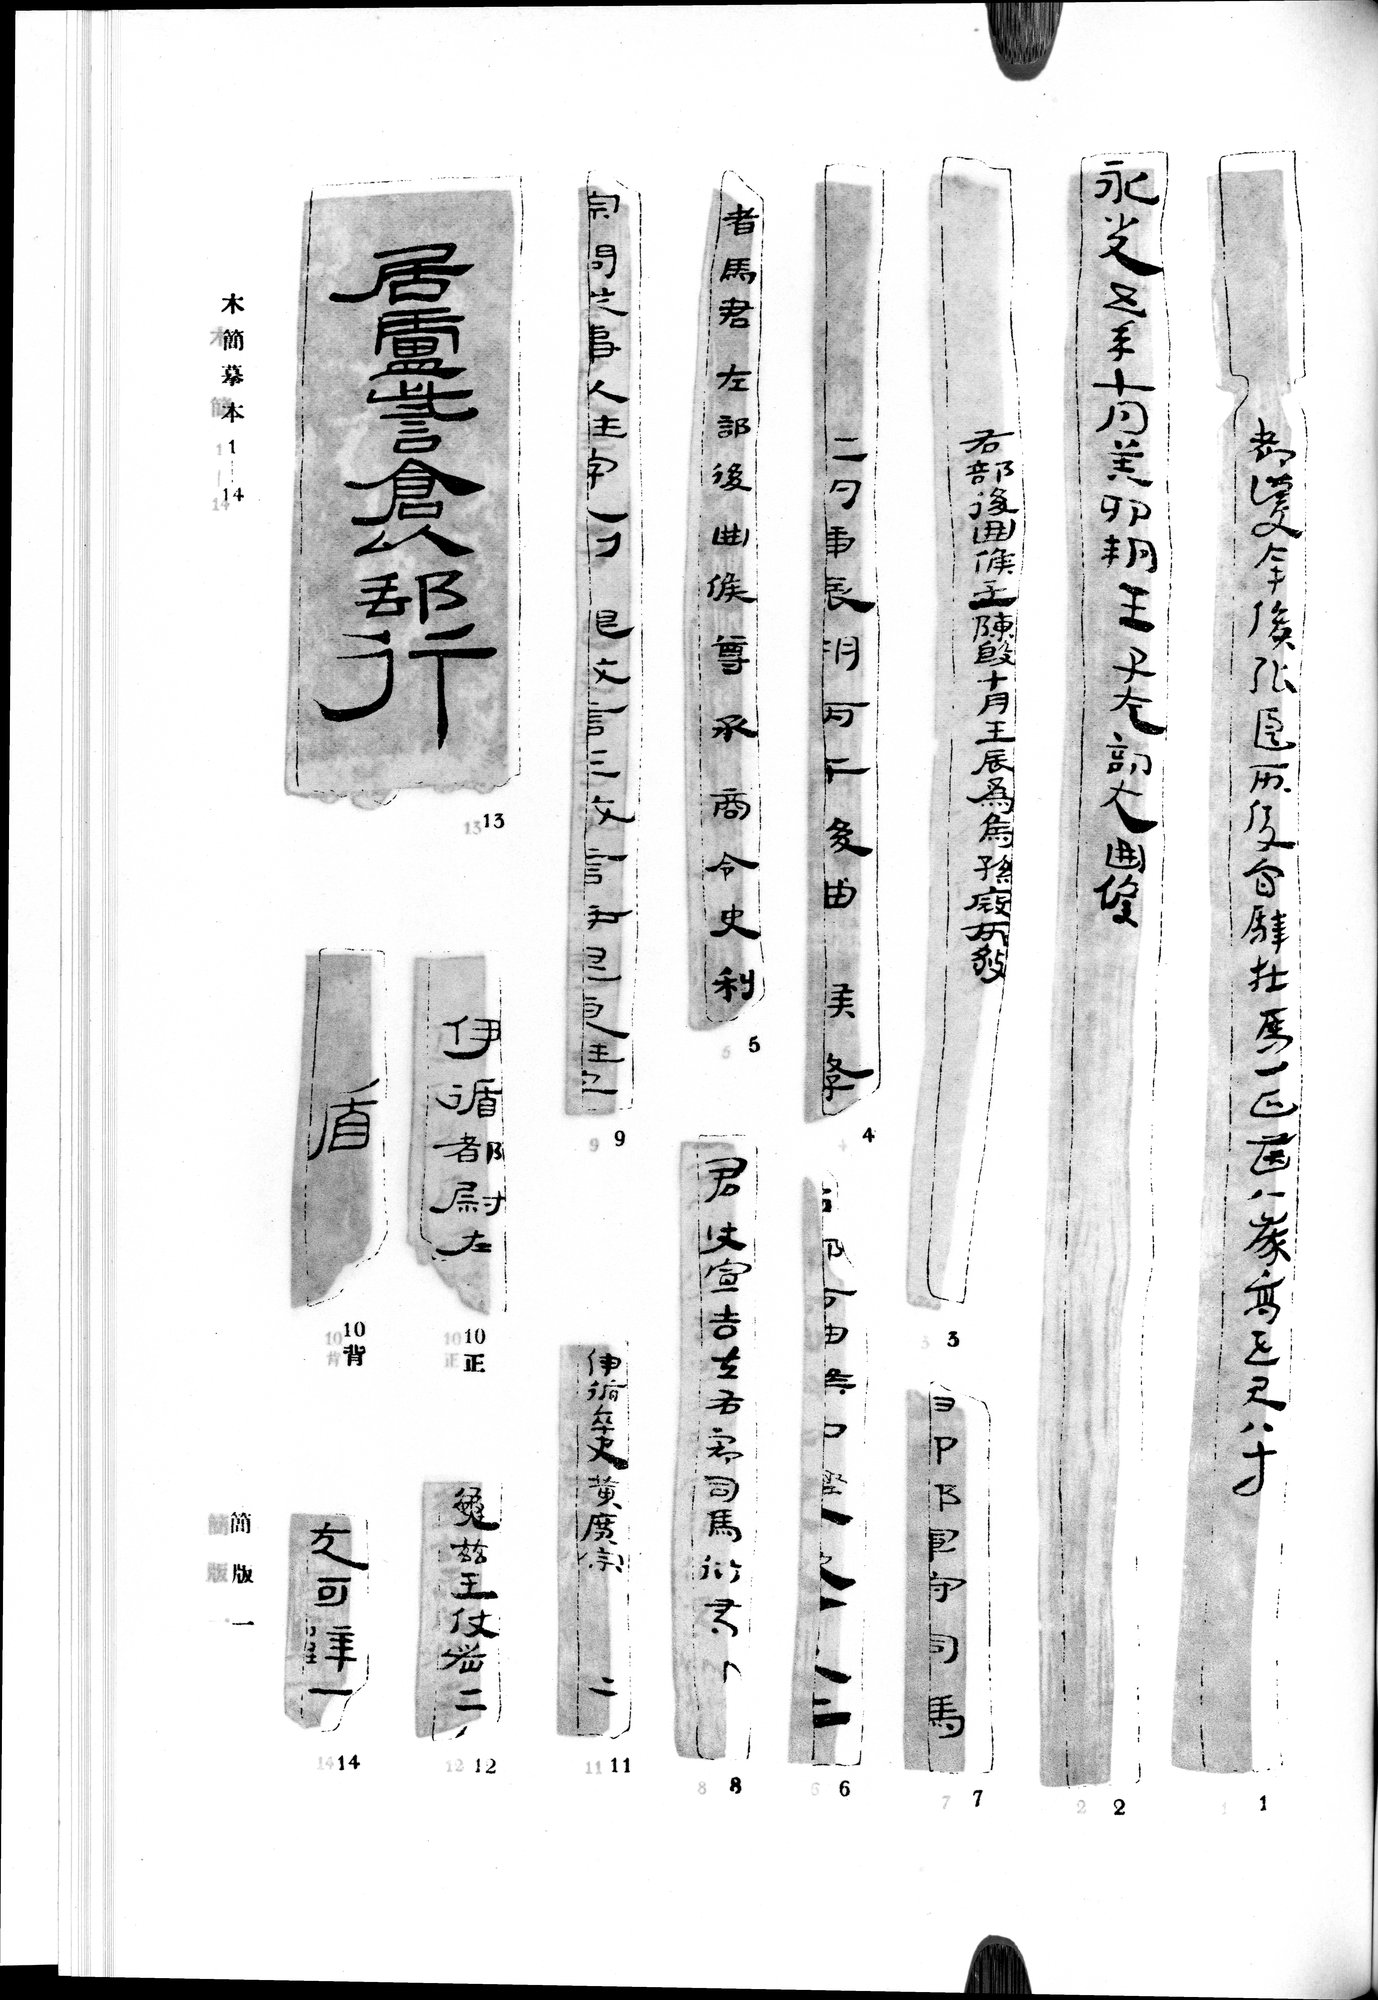 羅布淖爾考古記 : vol.1 / 355 ページ（白黒高解像度画像）